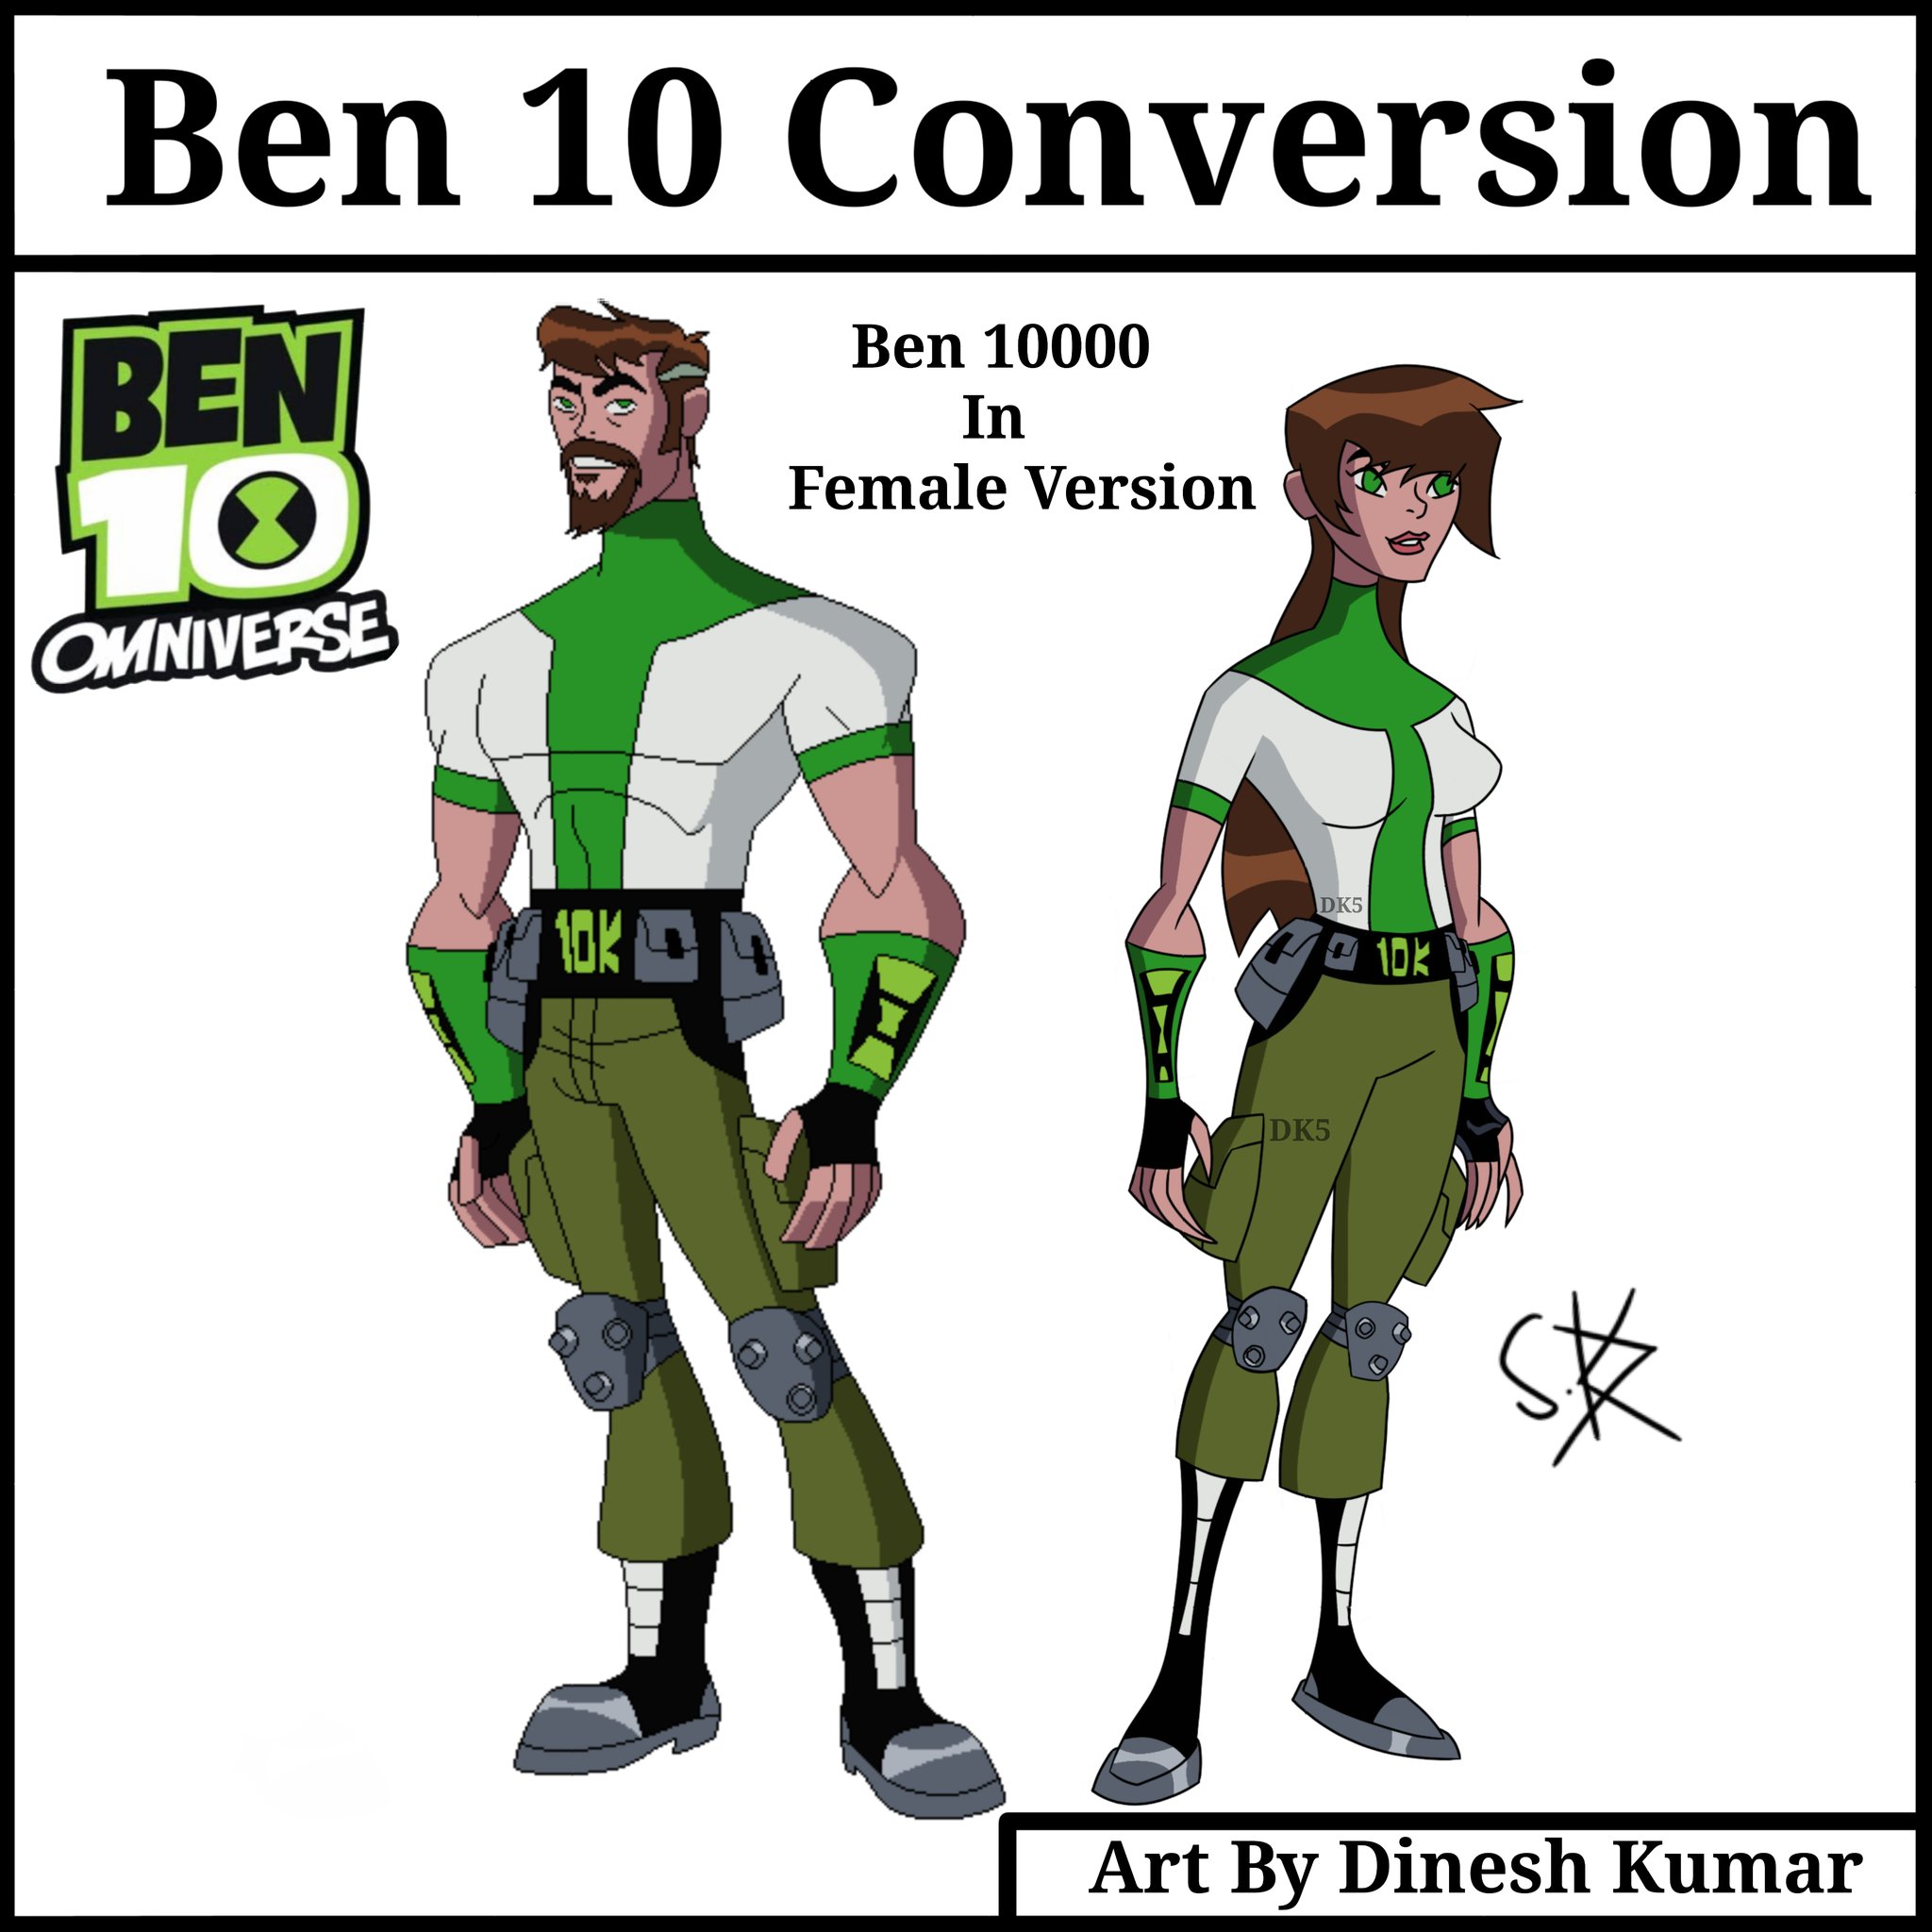 Ben 10,000 (2023) by Cryptdoo on DeviantArt